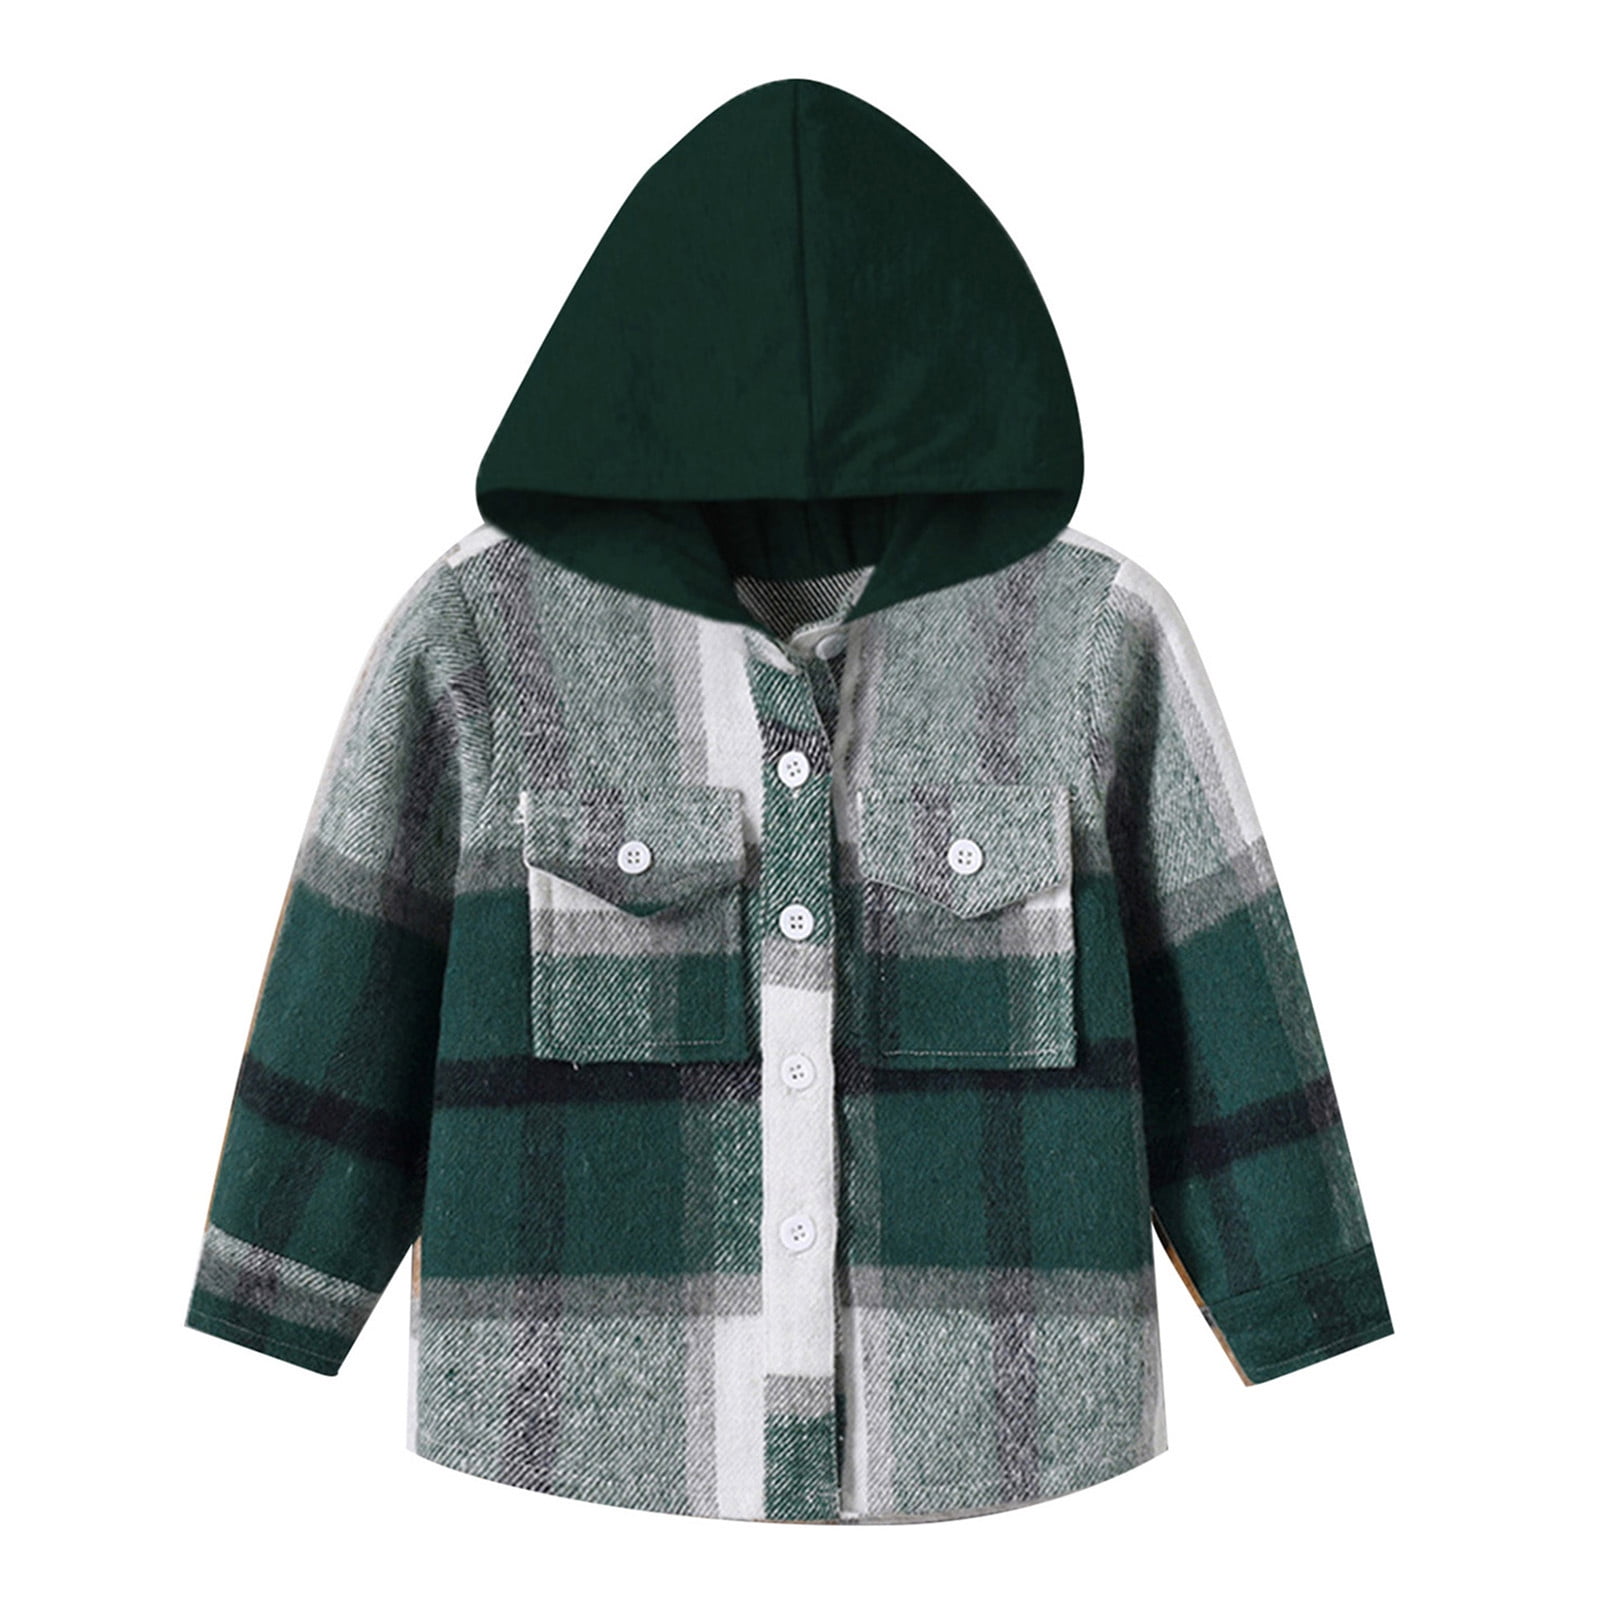 Toddler Boys Girls Shirt Coat Jacket Plaid Long Sleeve Kids Tops Hooded ...